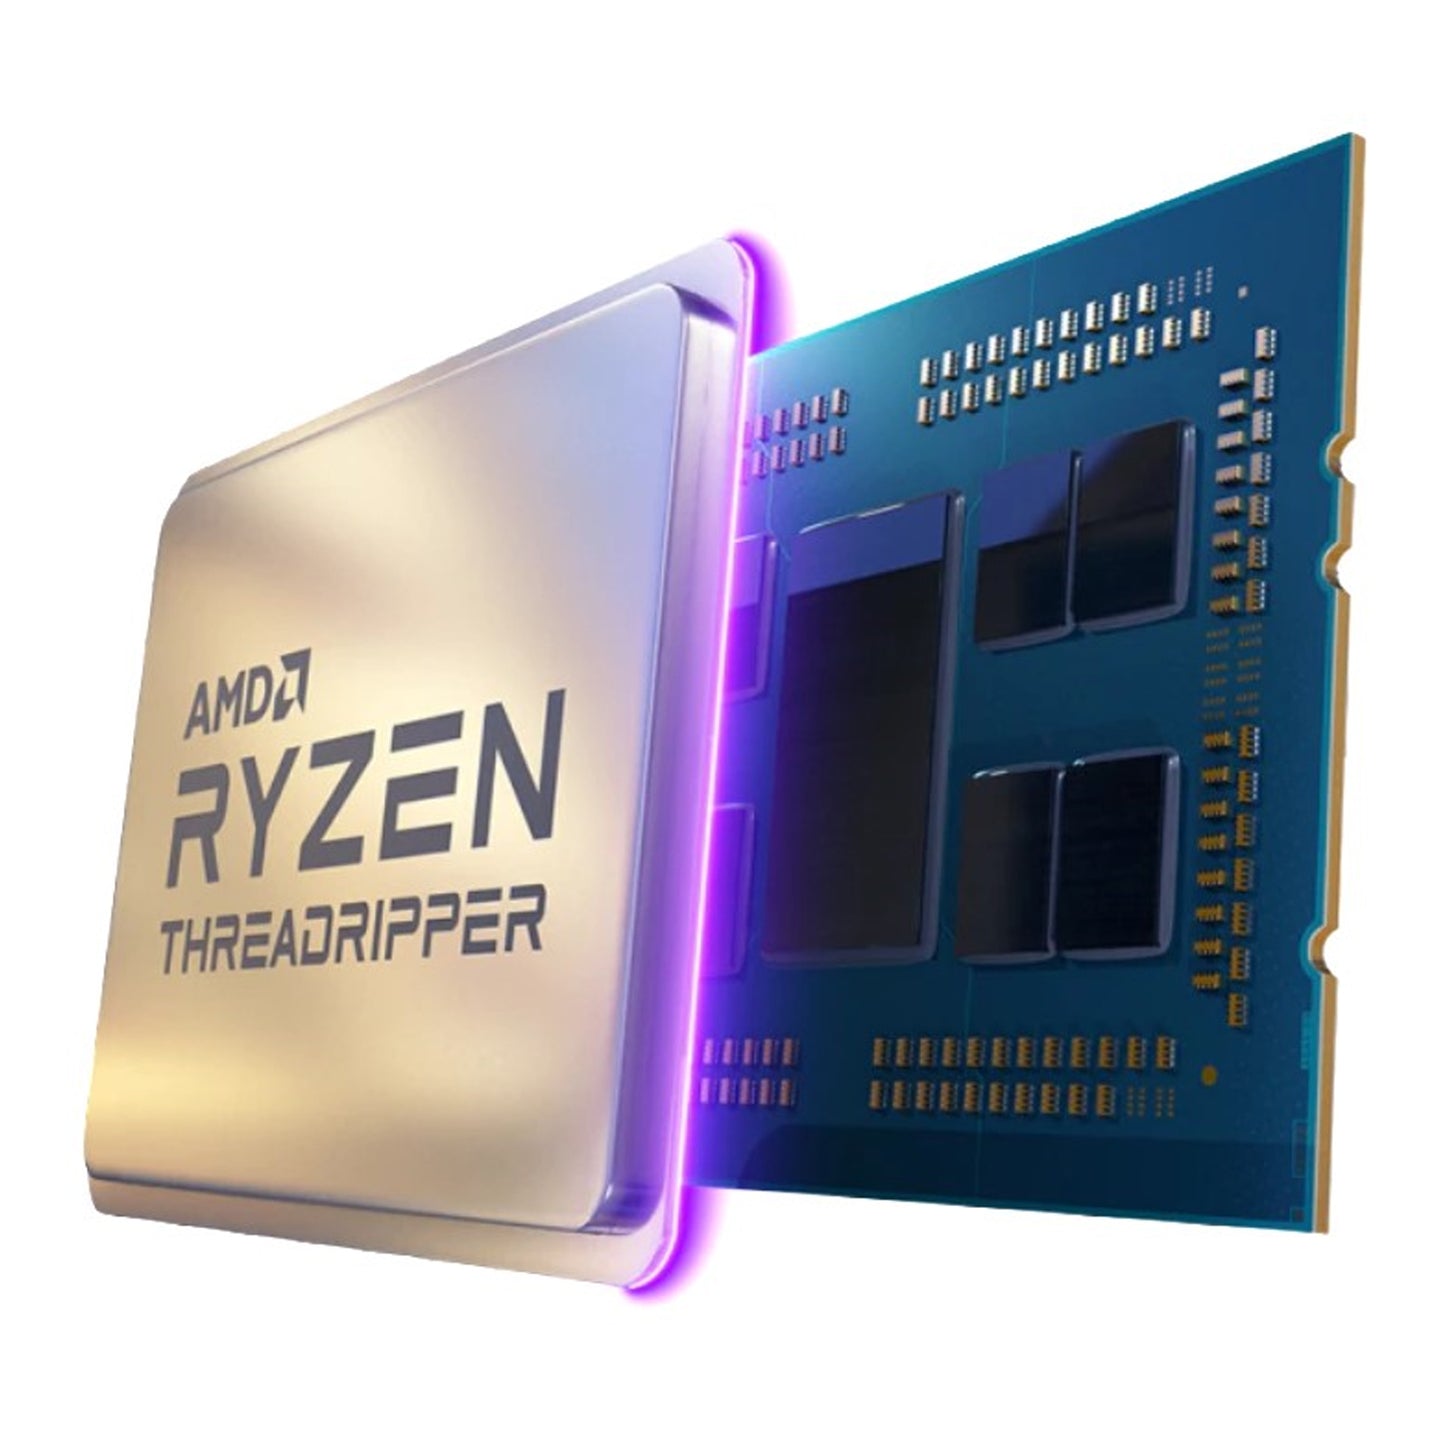 AMD Ryzen थ्रेडिपर 3990X डेस्कटॉप प्रोसेसर 64 कोर 4.3GHz तक 292MB कैश sTRX4 सॉकेट